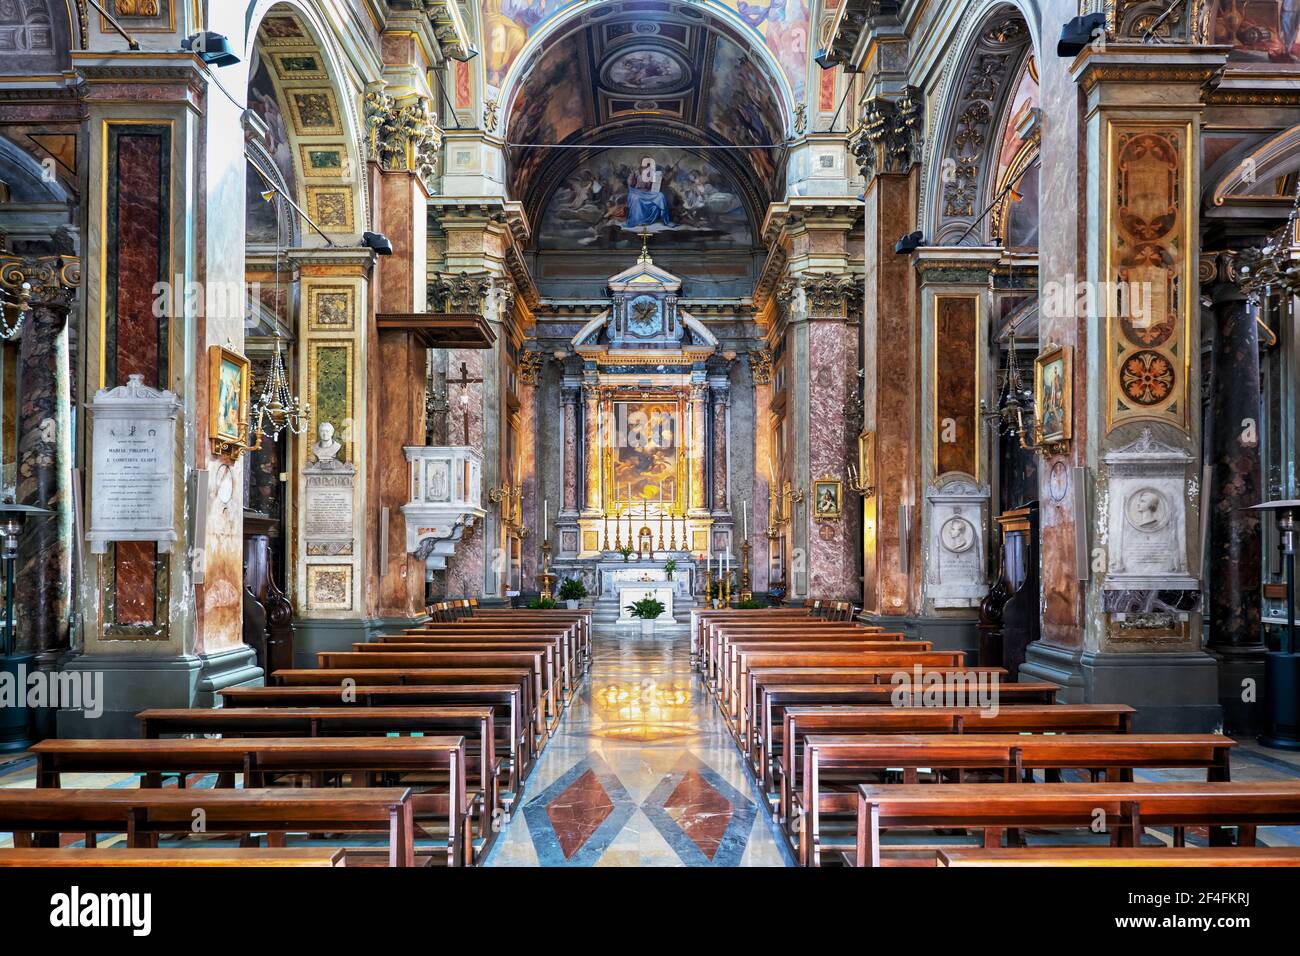 Chiesa di San Rocco all Augusteo, Church of Saint Roch Baroque interior in Rome, Italy Stock Photo